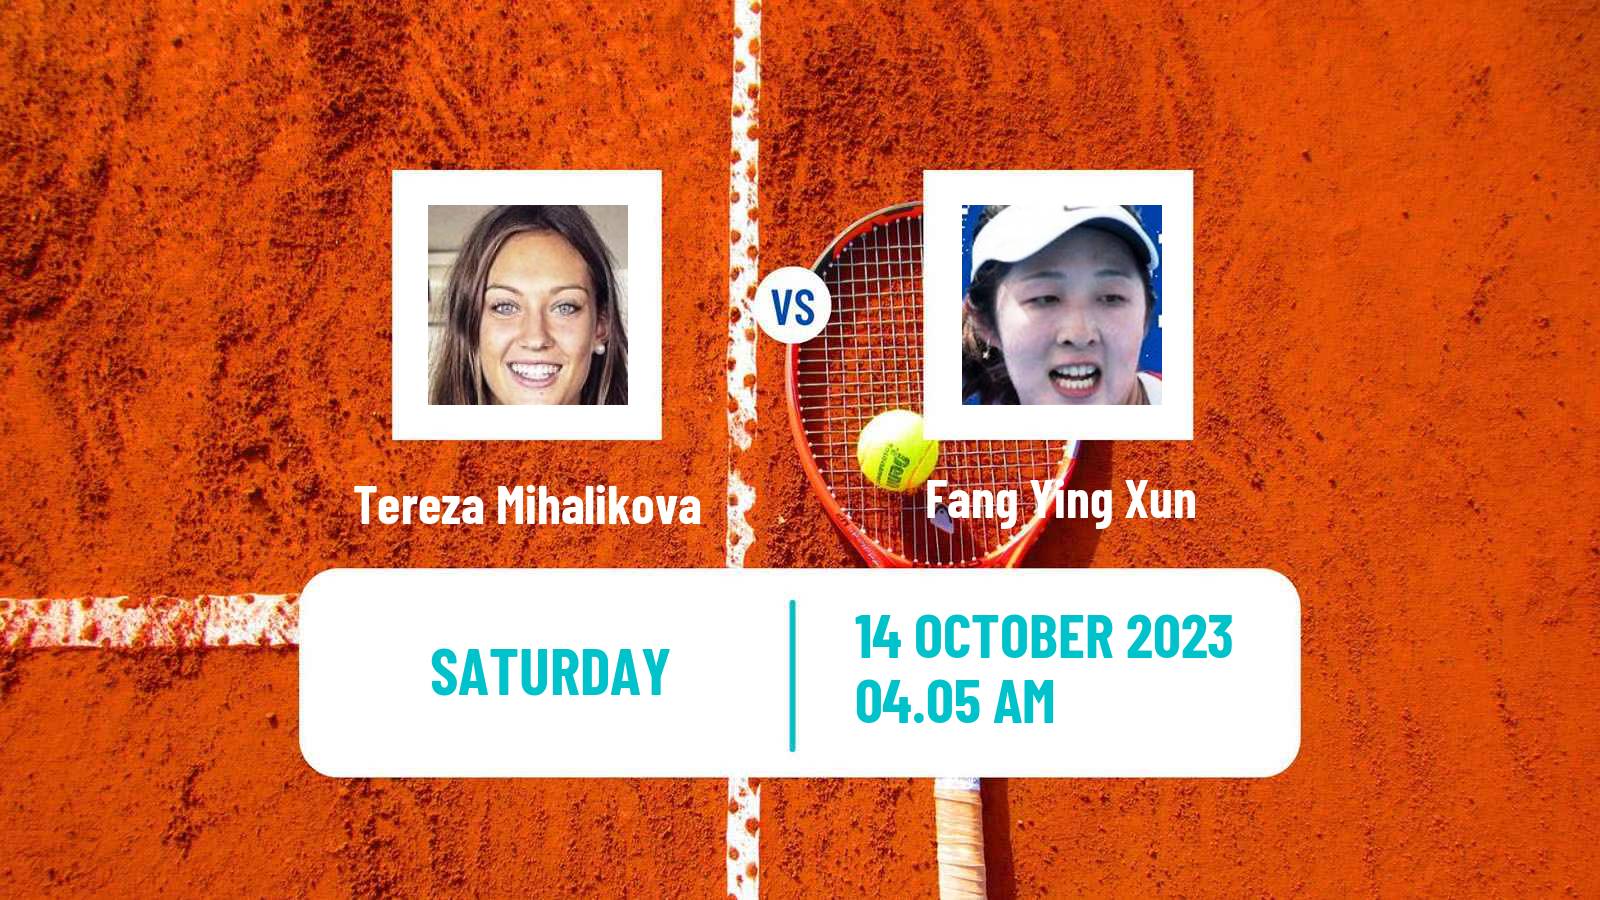 Tennis WTA Nanchang Tereza Mihalikova - Fang Ying Xun